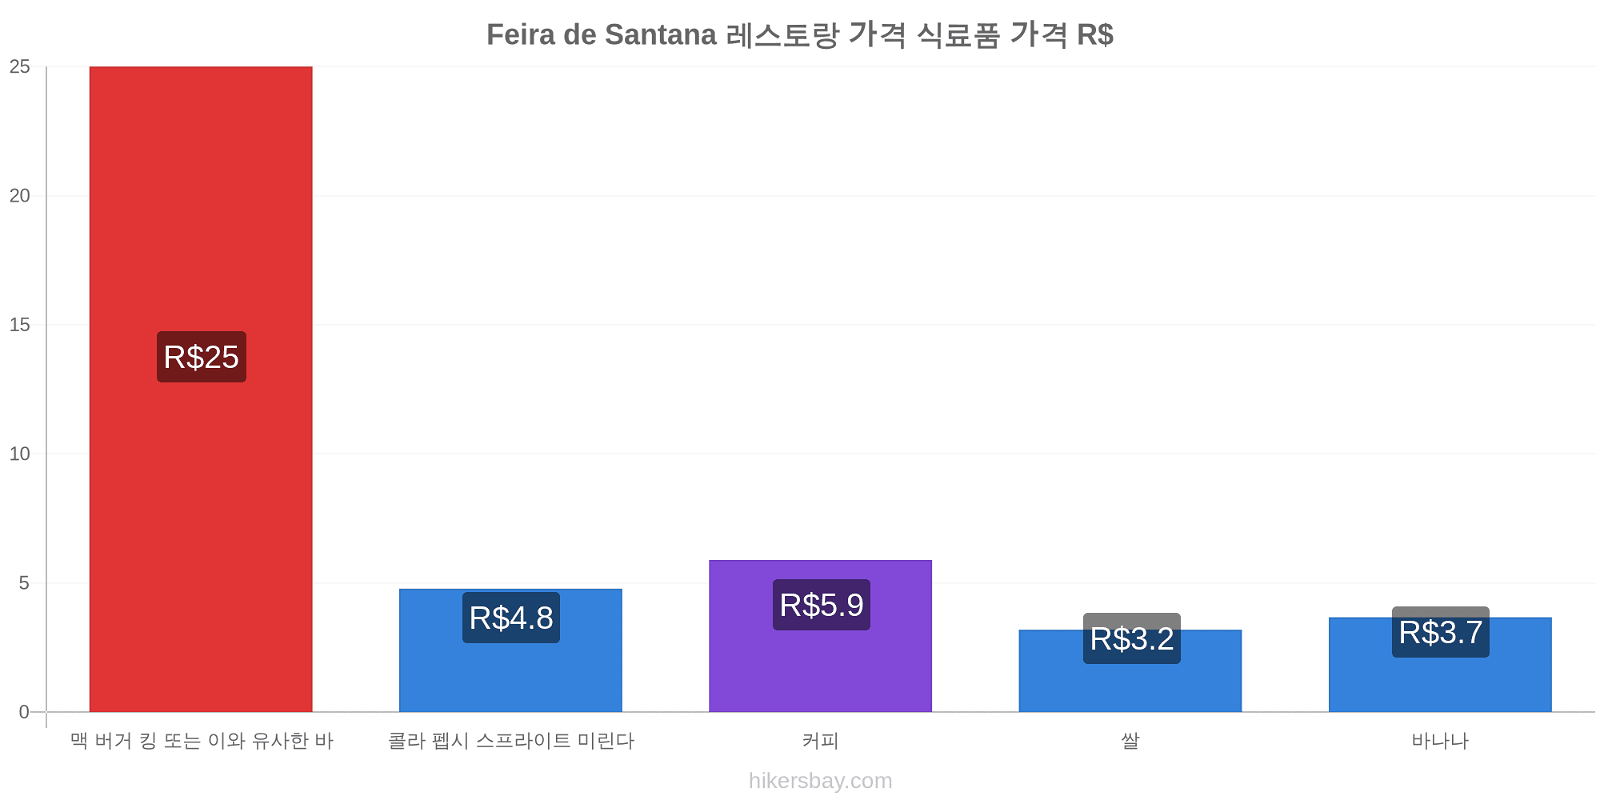 Feira de Santana 가격 변동 hikersbay.com